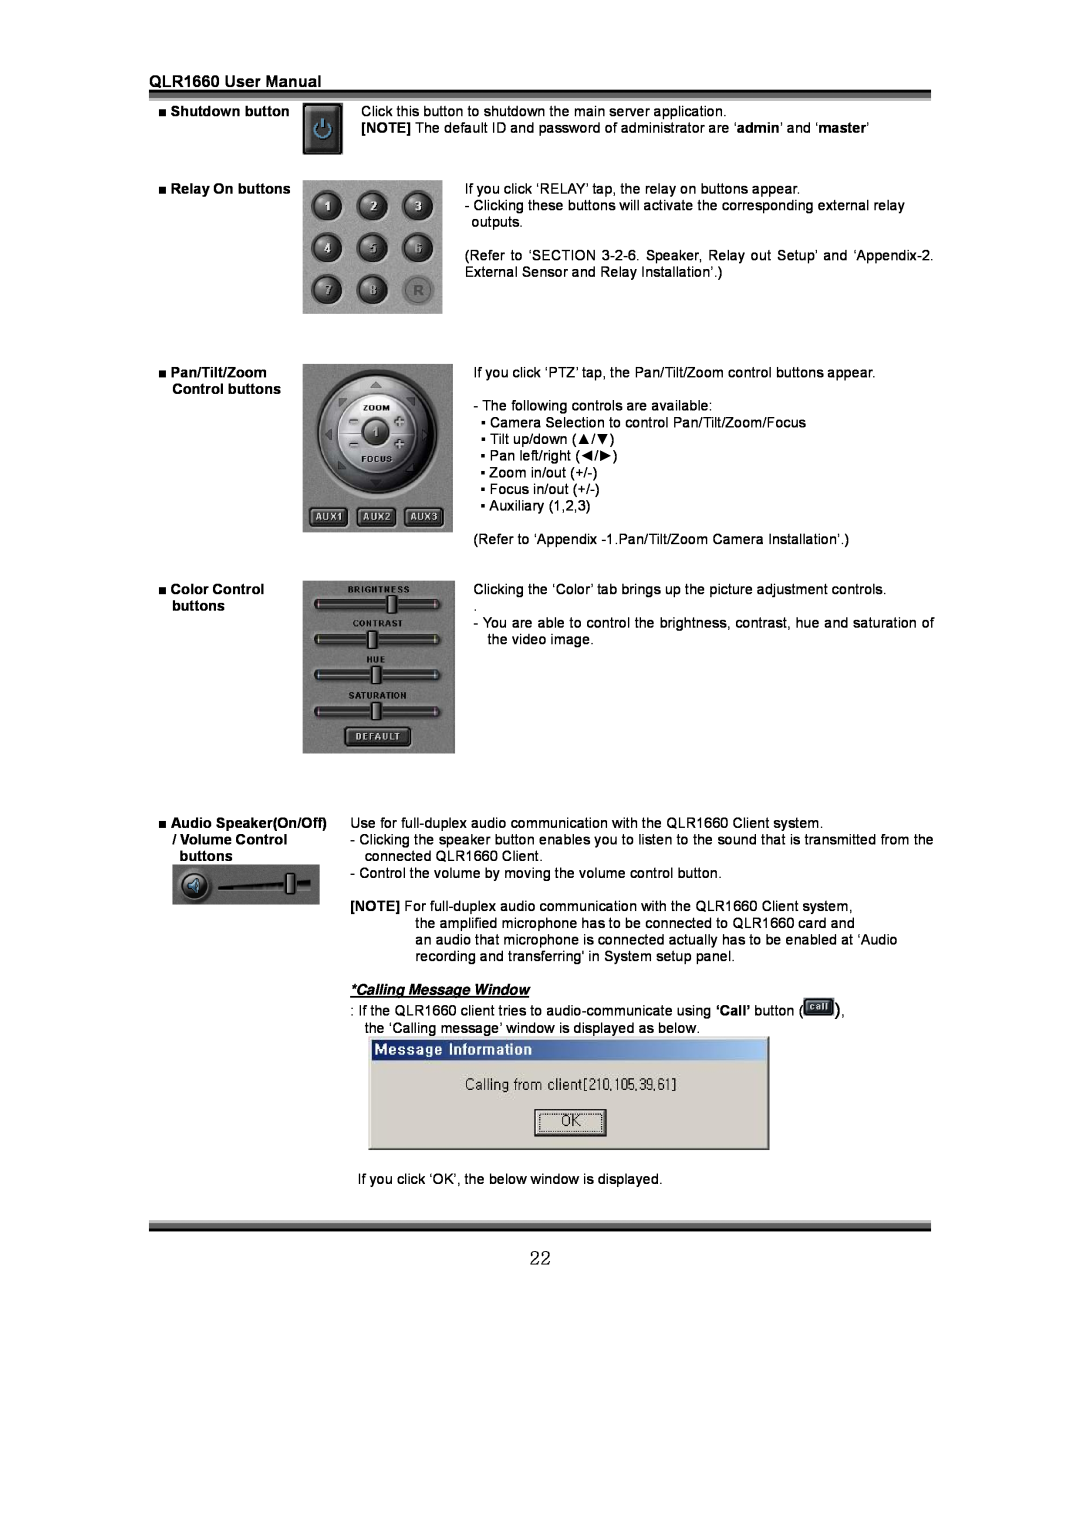 LOREX Technology QLR1660 Shutdown button, Relay On buttons, Pan/Tilt/Zoom, Control buttons, Color Control, Volume Control 